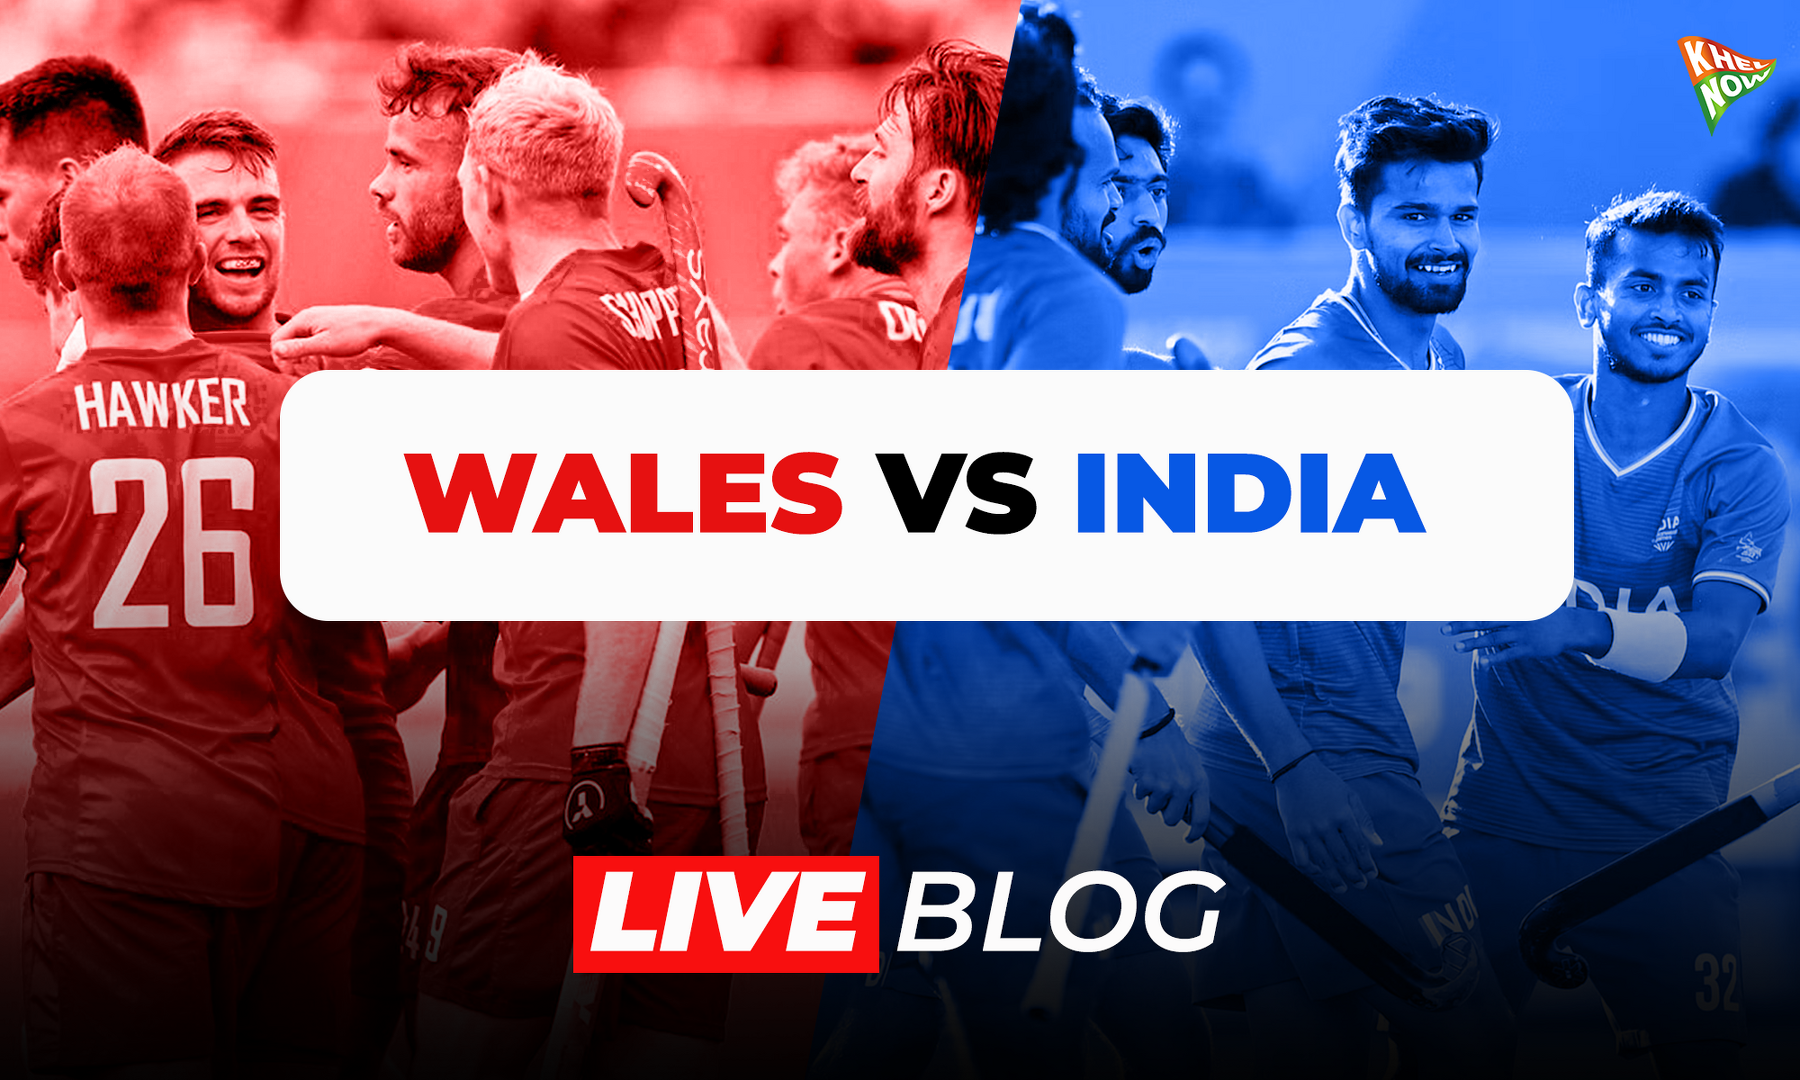 India vs Wales Live